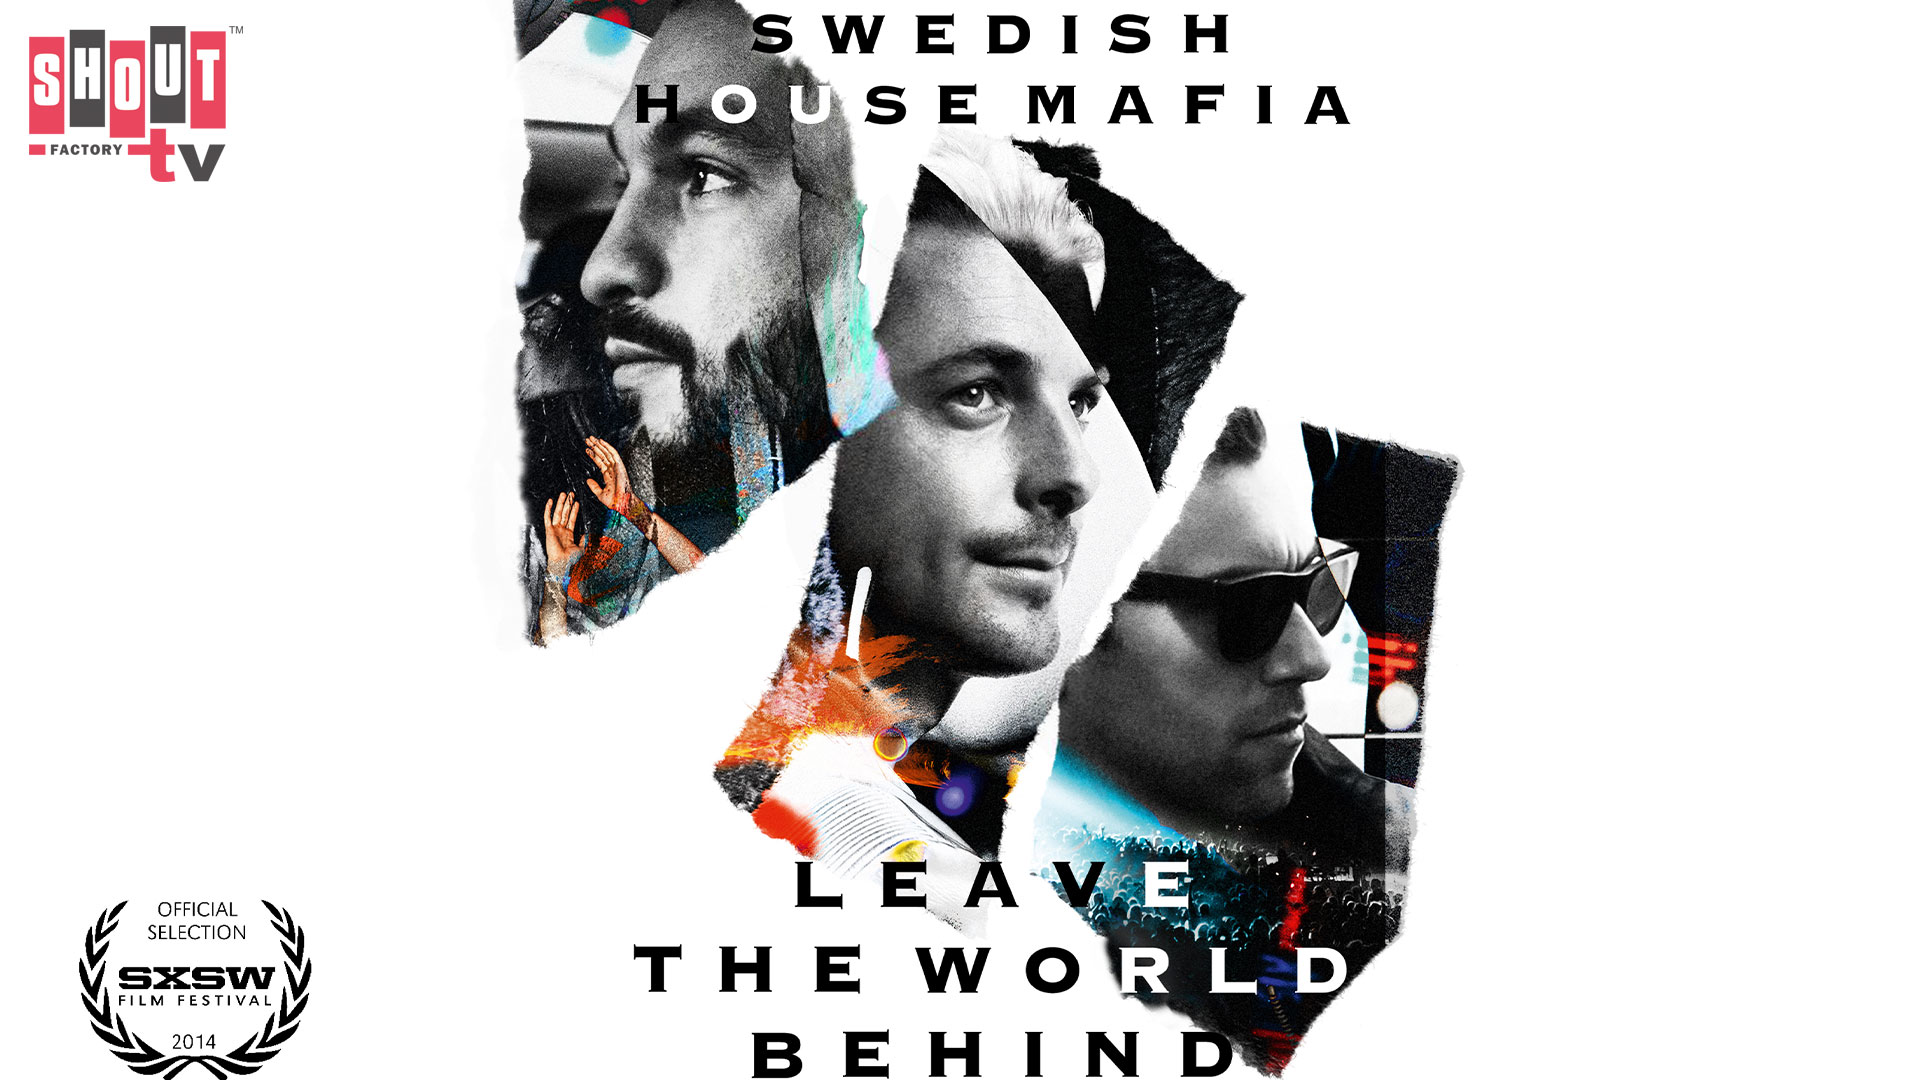 Swedish House Mafia: Leave The World Behind - Trailer